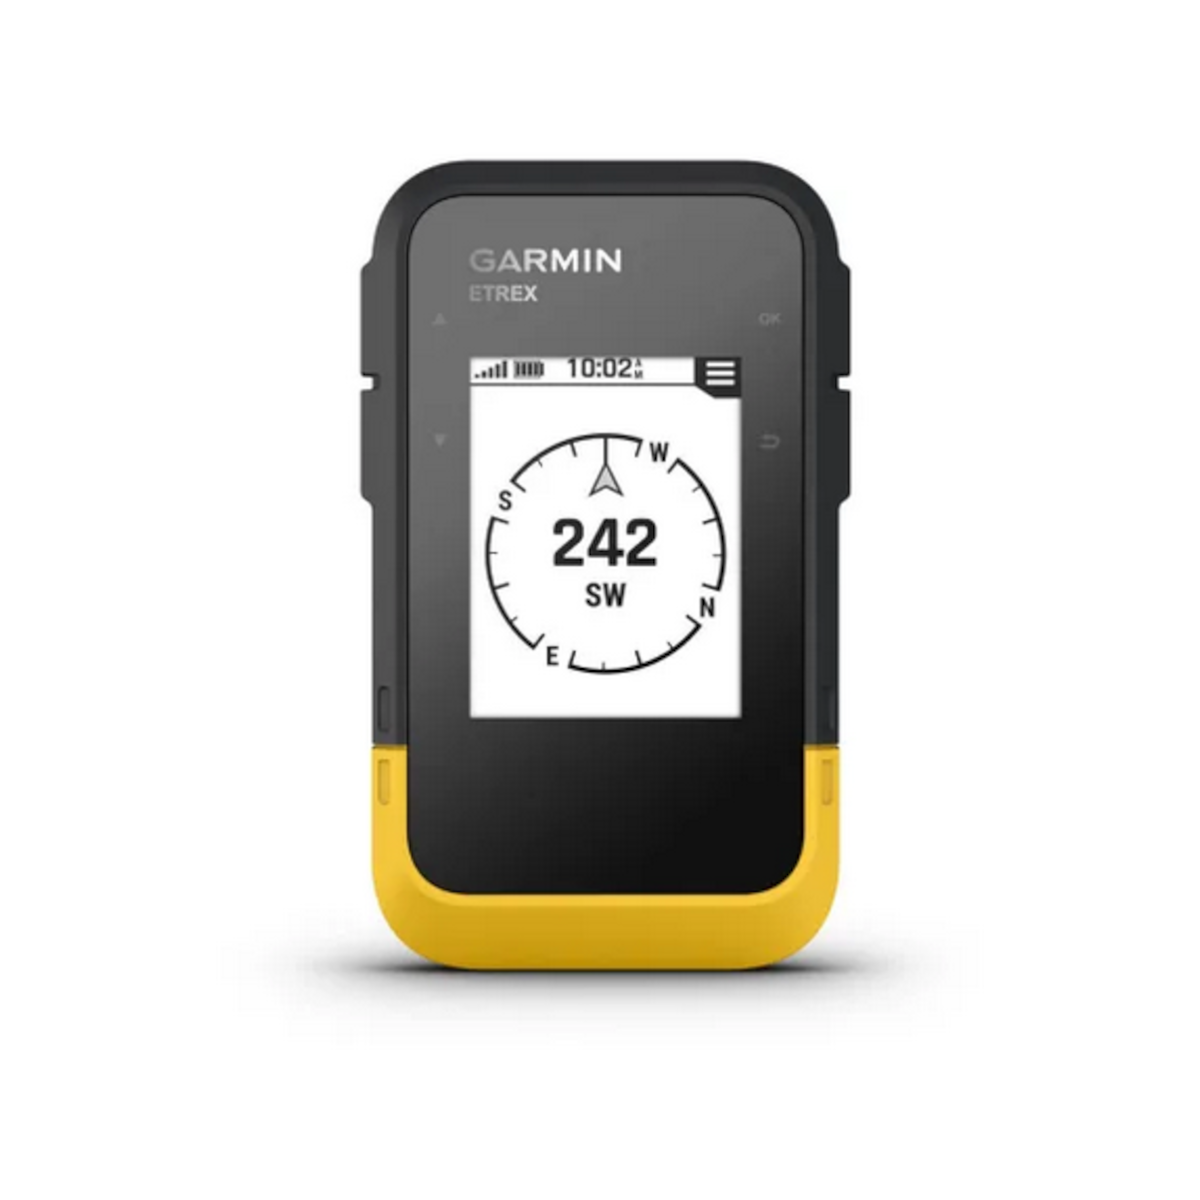 Garmin eTrex SE GPS portable